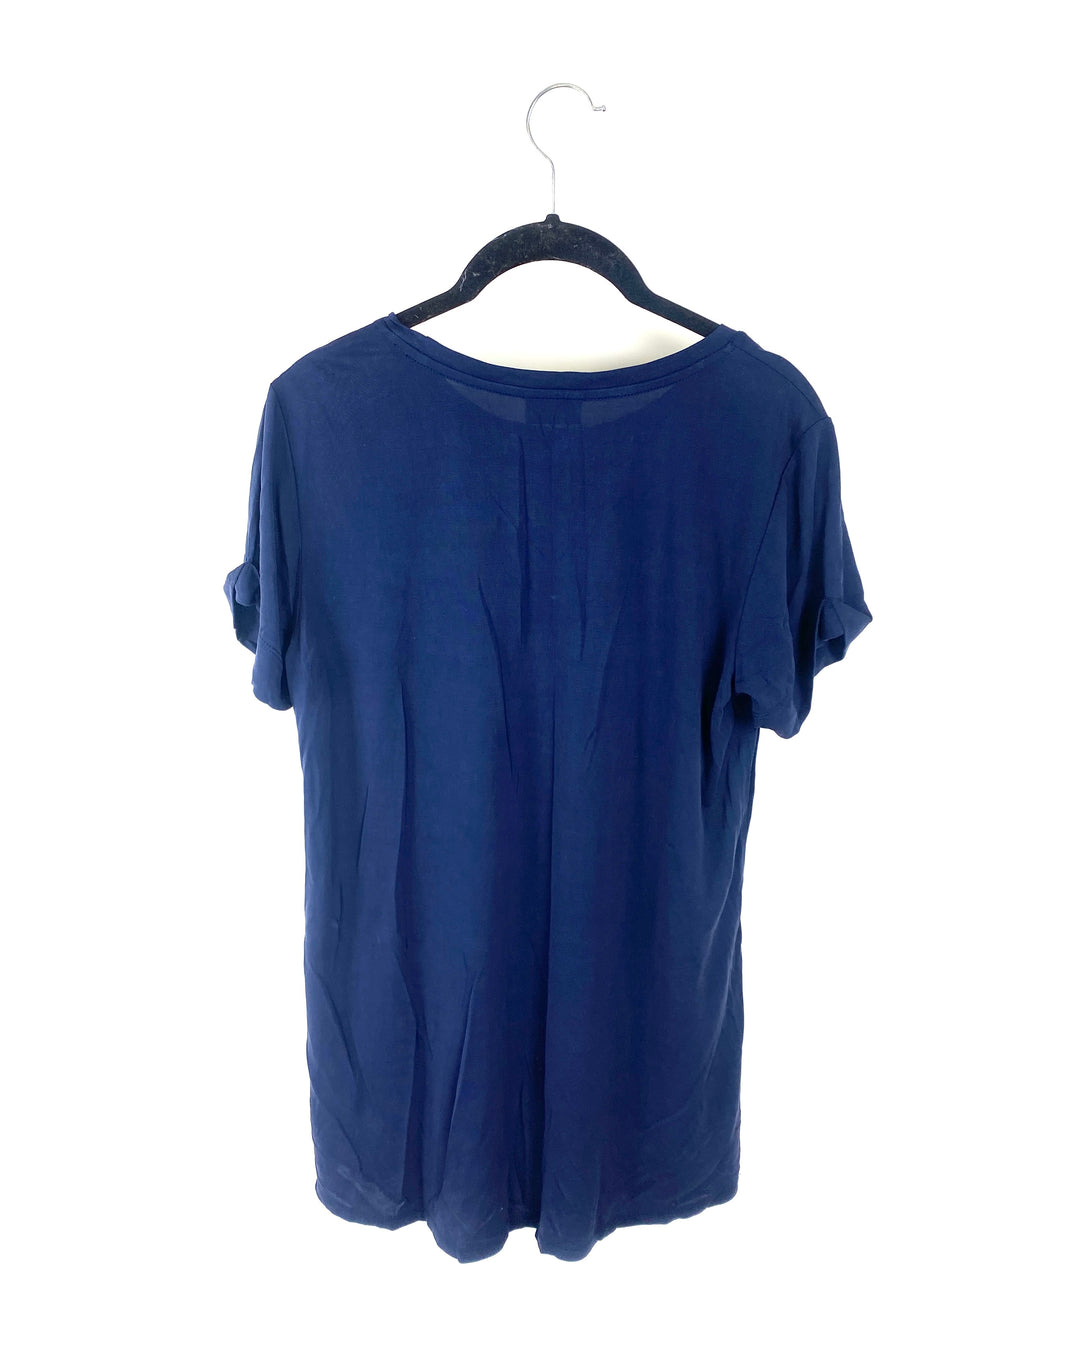 Navy Blue Cuffed Sleeve T-Shirt - Size 6-8